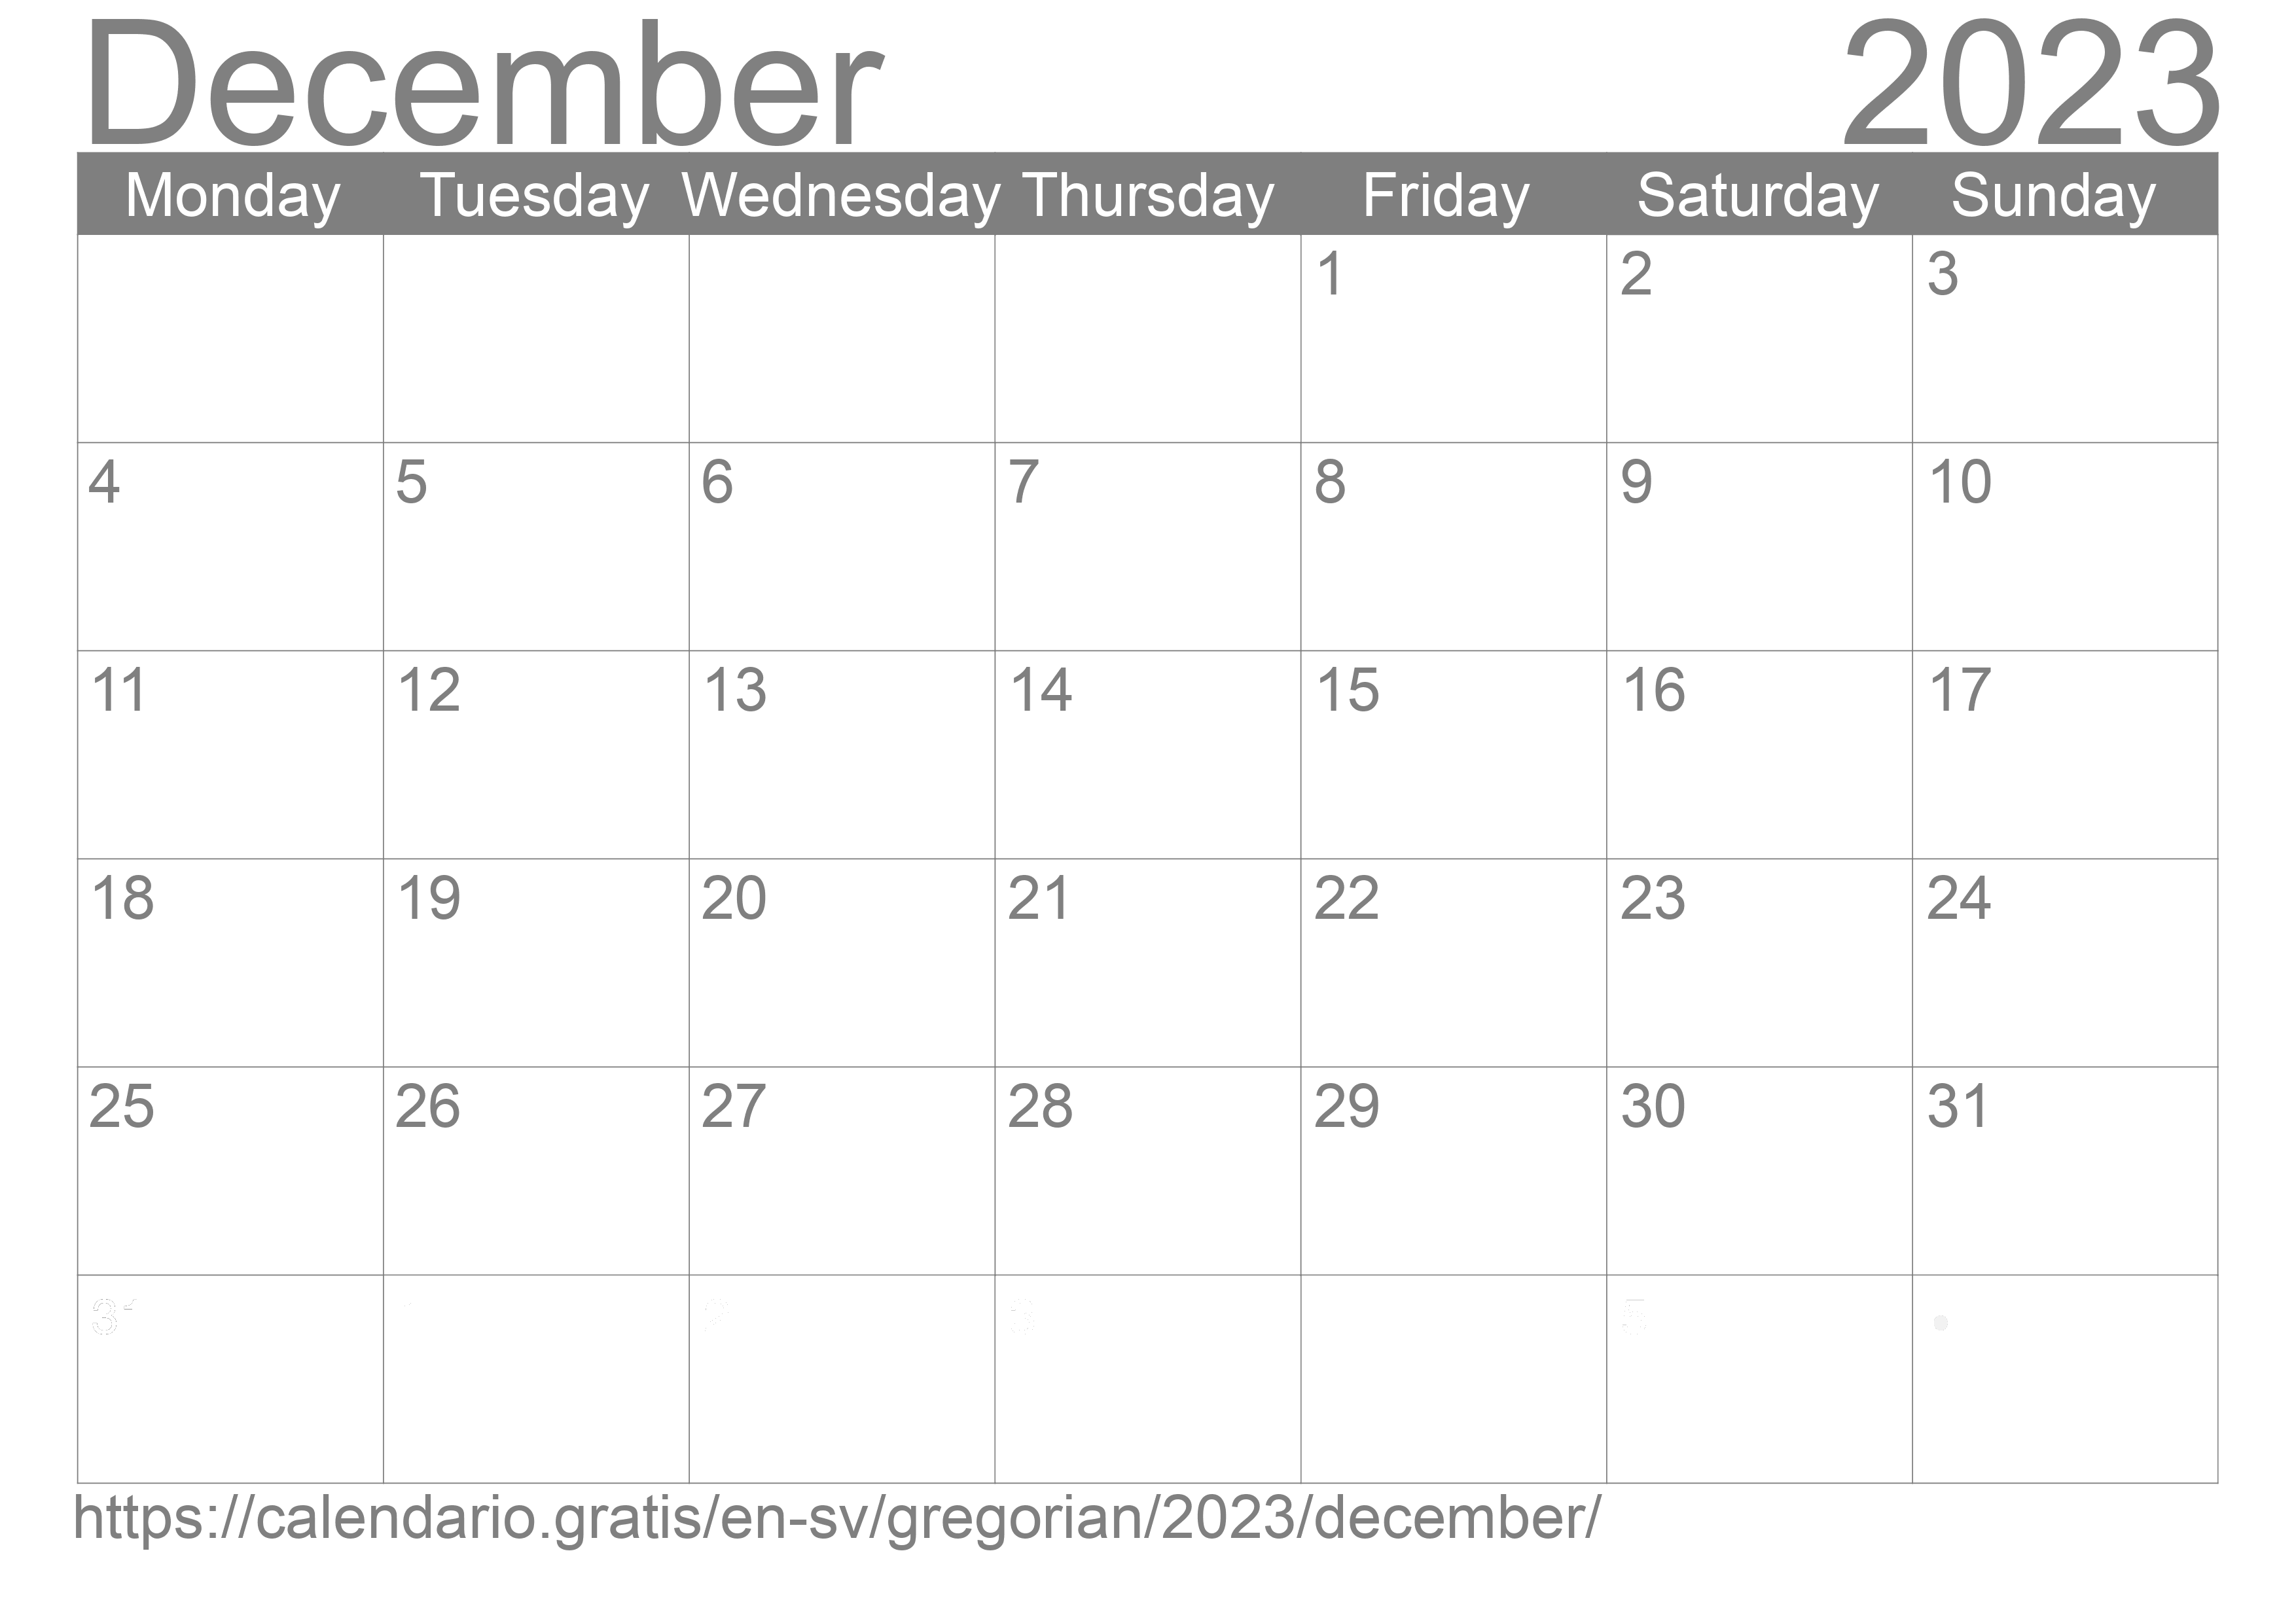 Calendar December 2023 to print